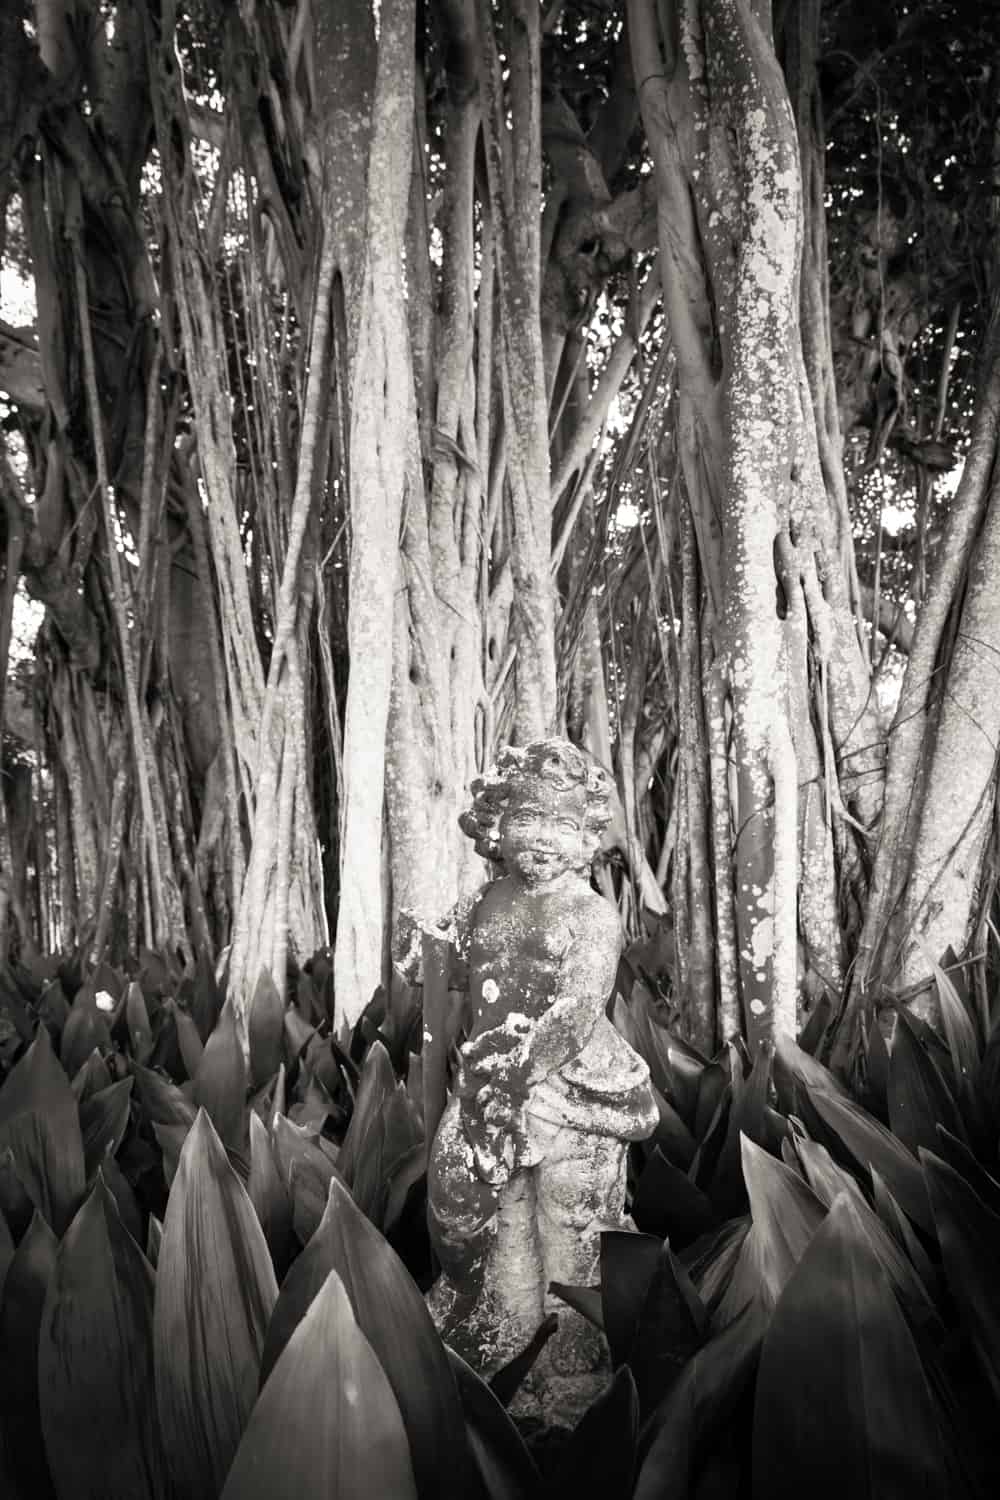 Black and white photo of statue in Ca d'Zan dwarf garden in Sarasota